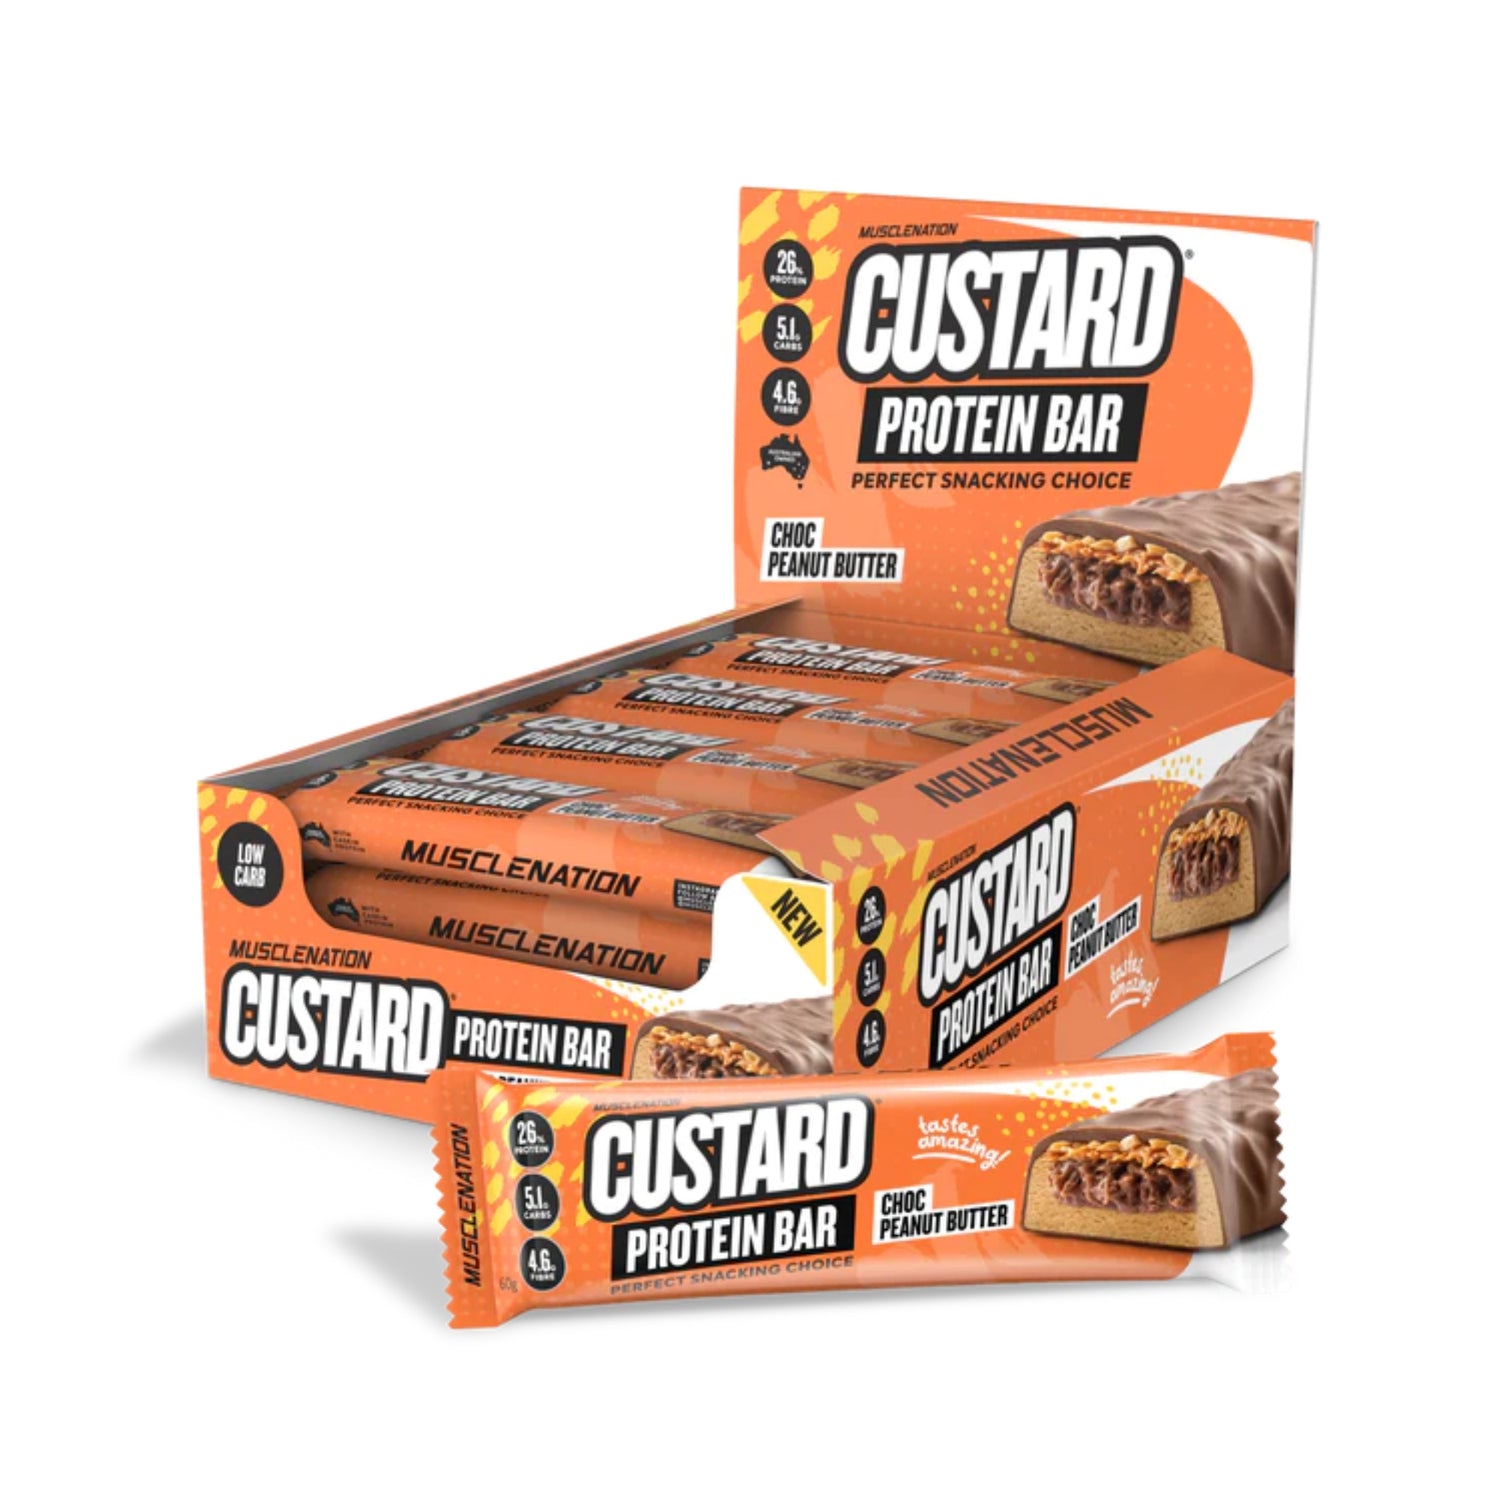 Muscle Nation Custard Protein Bar - Box of 12 Choc Peanut Butter